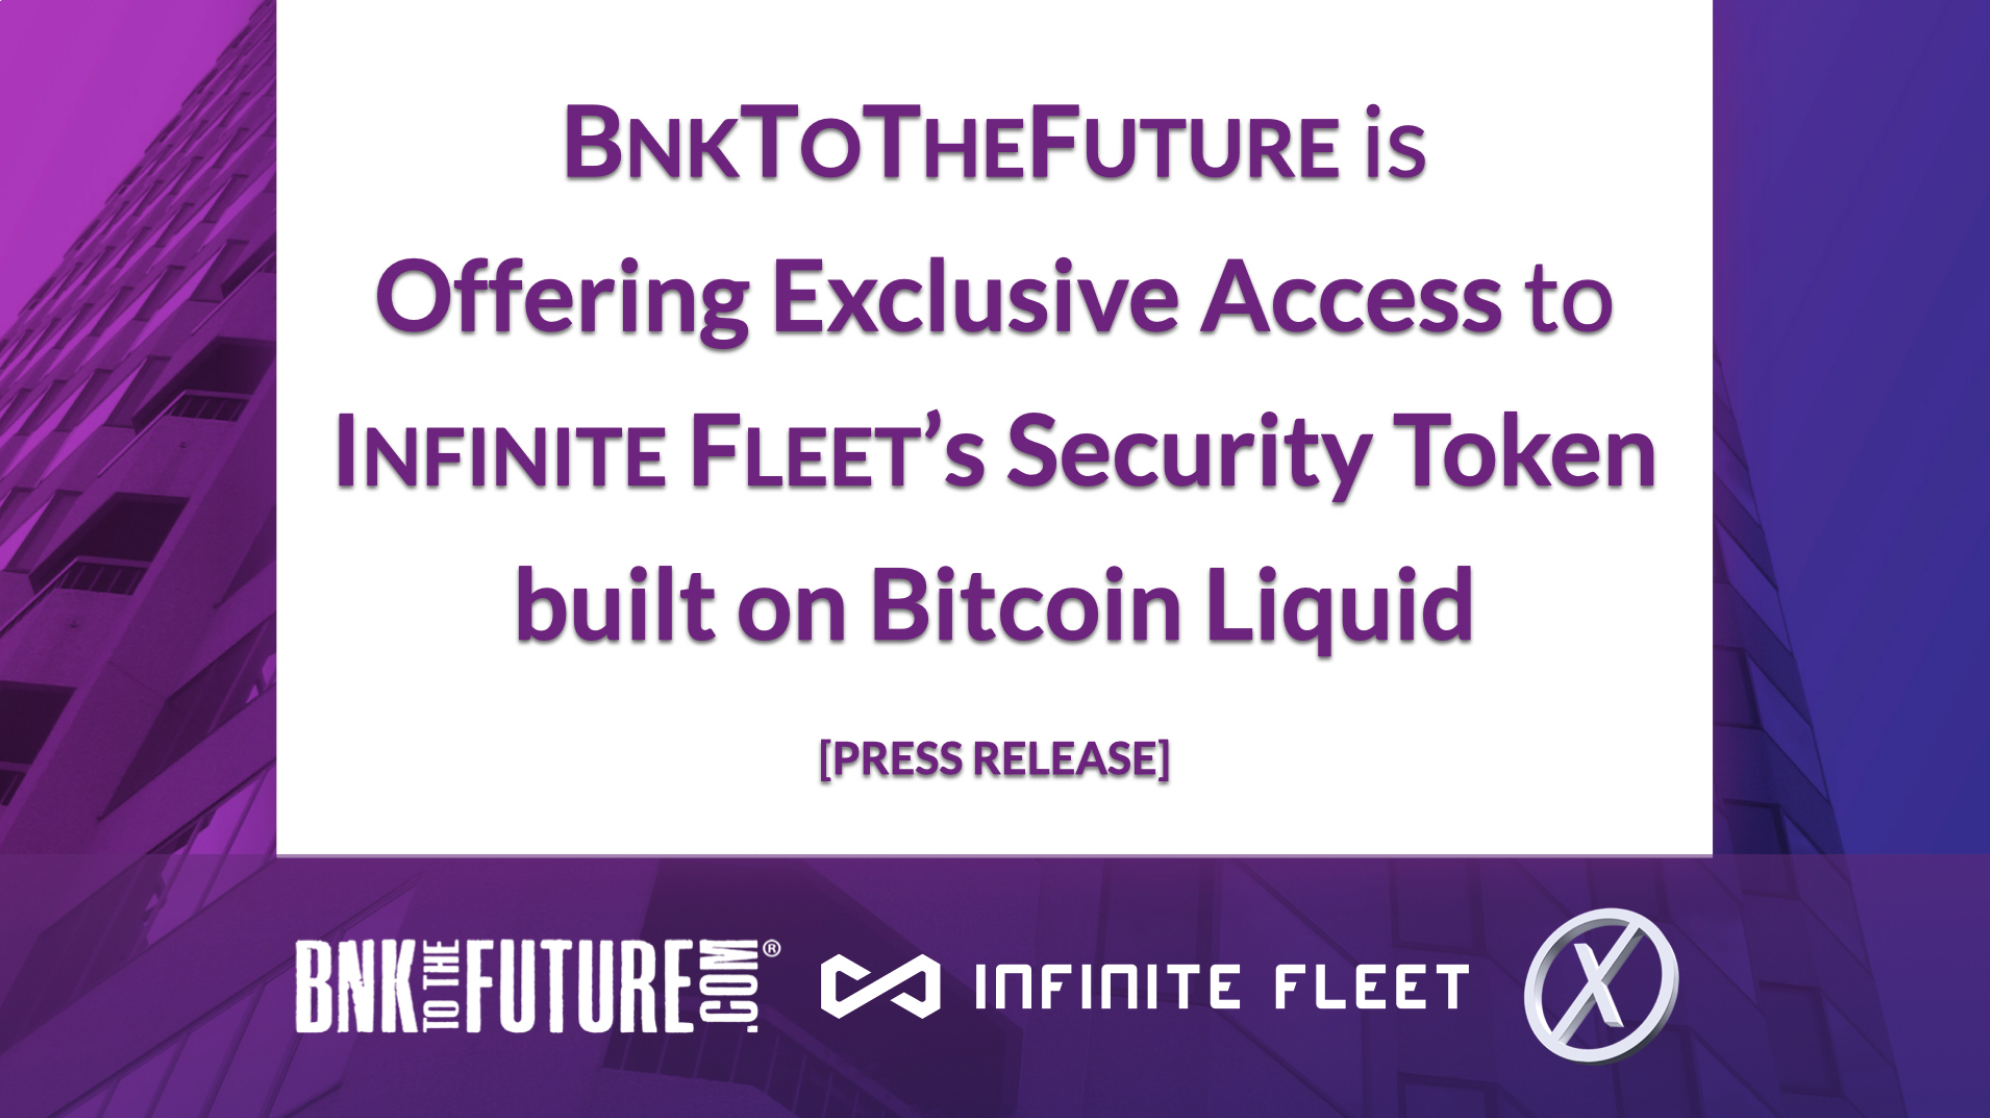 BnkToTheFuture: Max Keiser, Charlie Lee, Samson Mow & Simon Dixon Discuss "Infinite Fleet"Gaming Token And Project